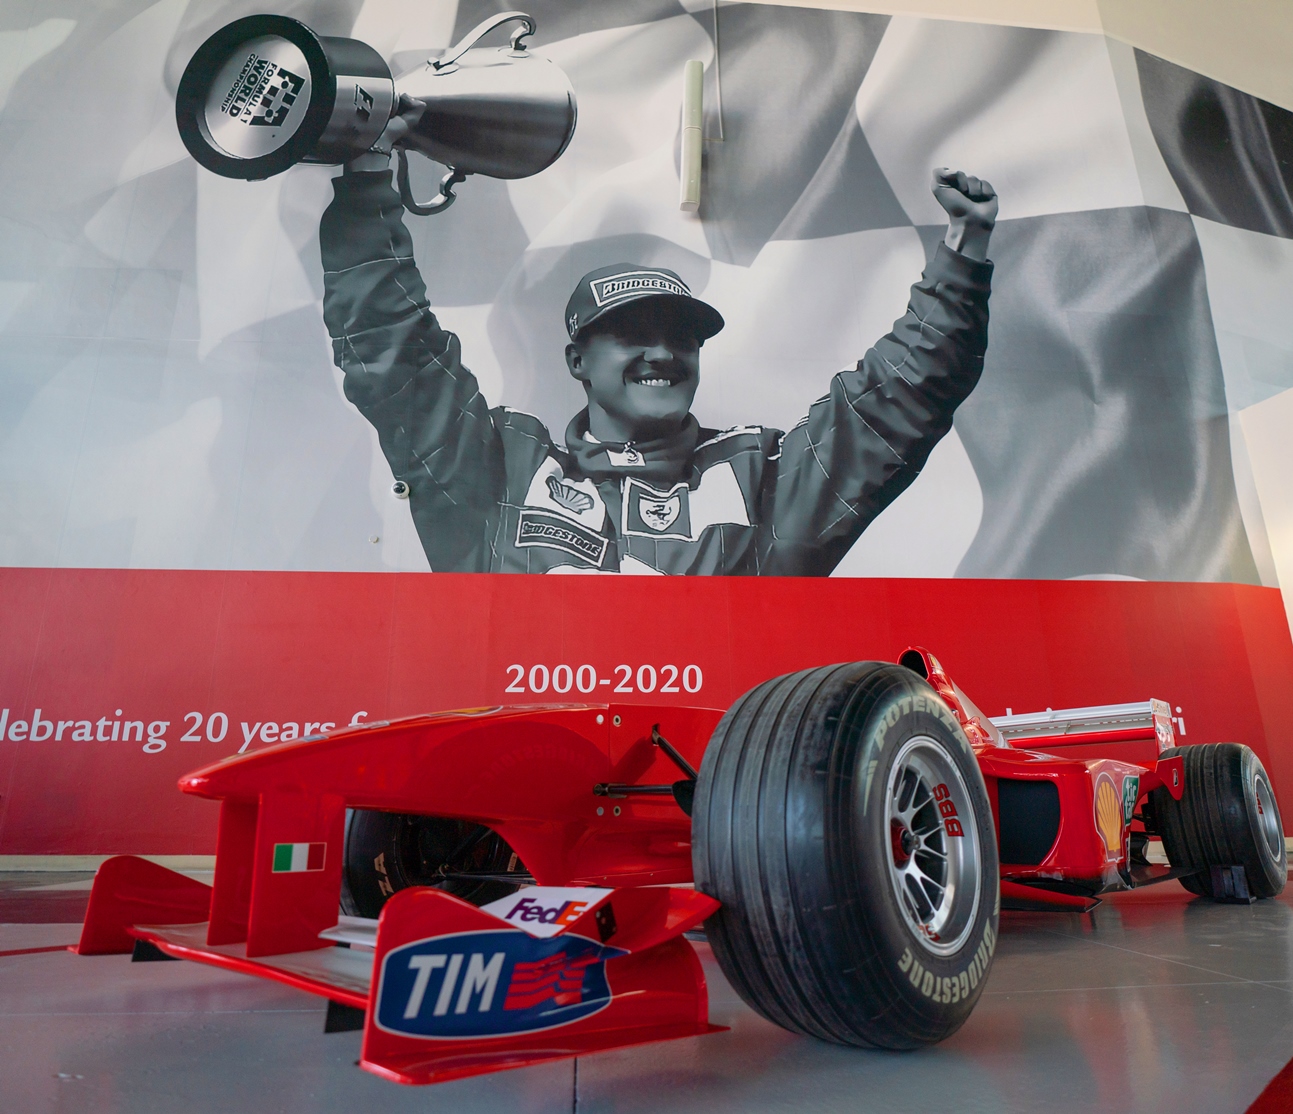 Ferrari World Abu Dhabi launches Schumacher, the Scuderia Ferrari Champion experience - Park World Online